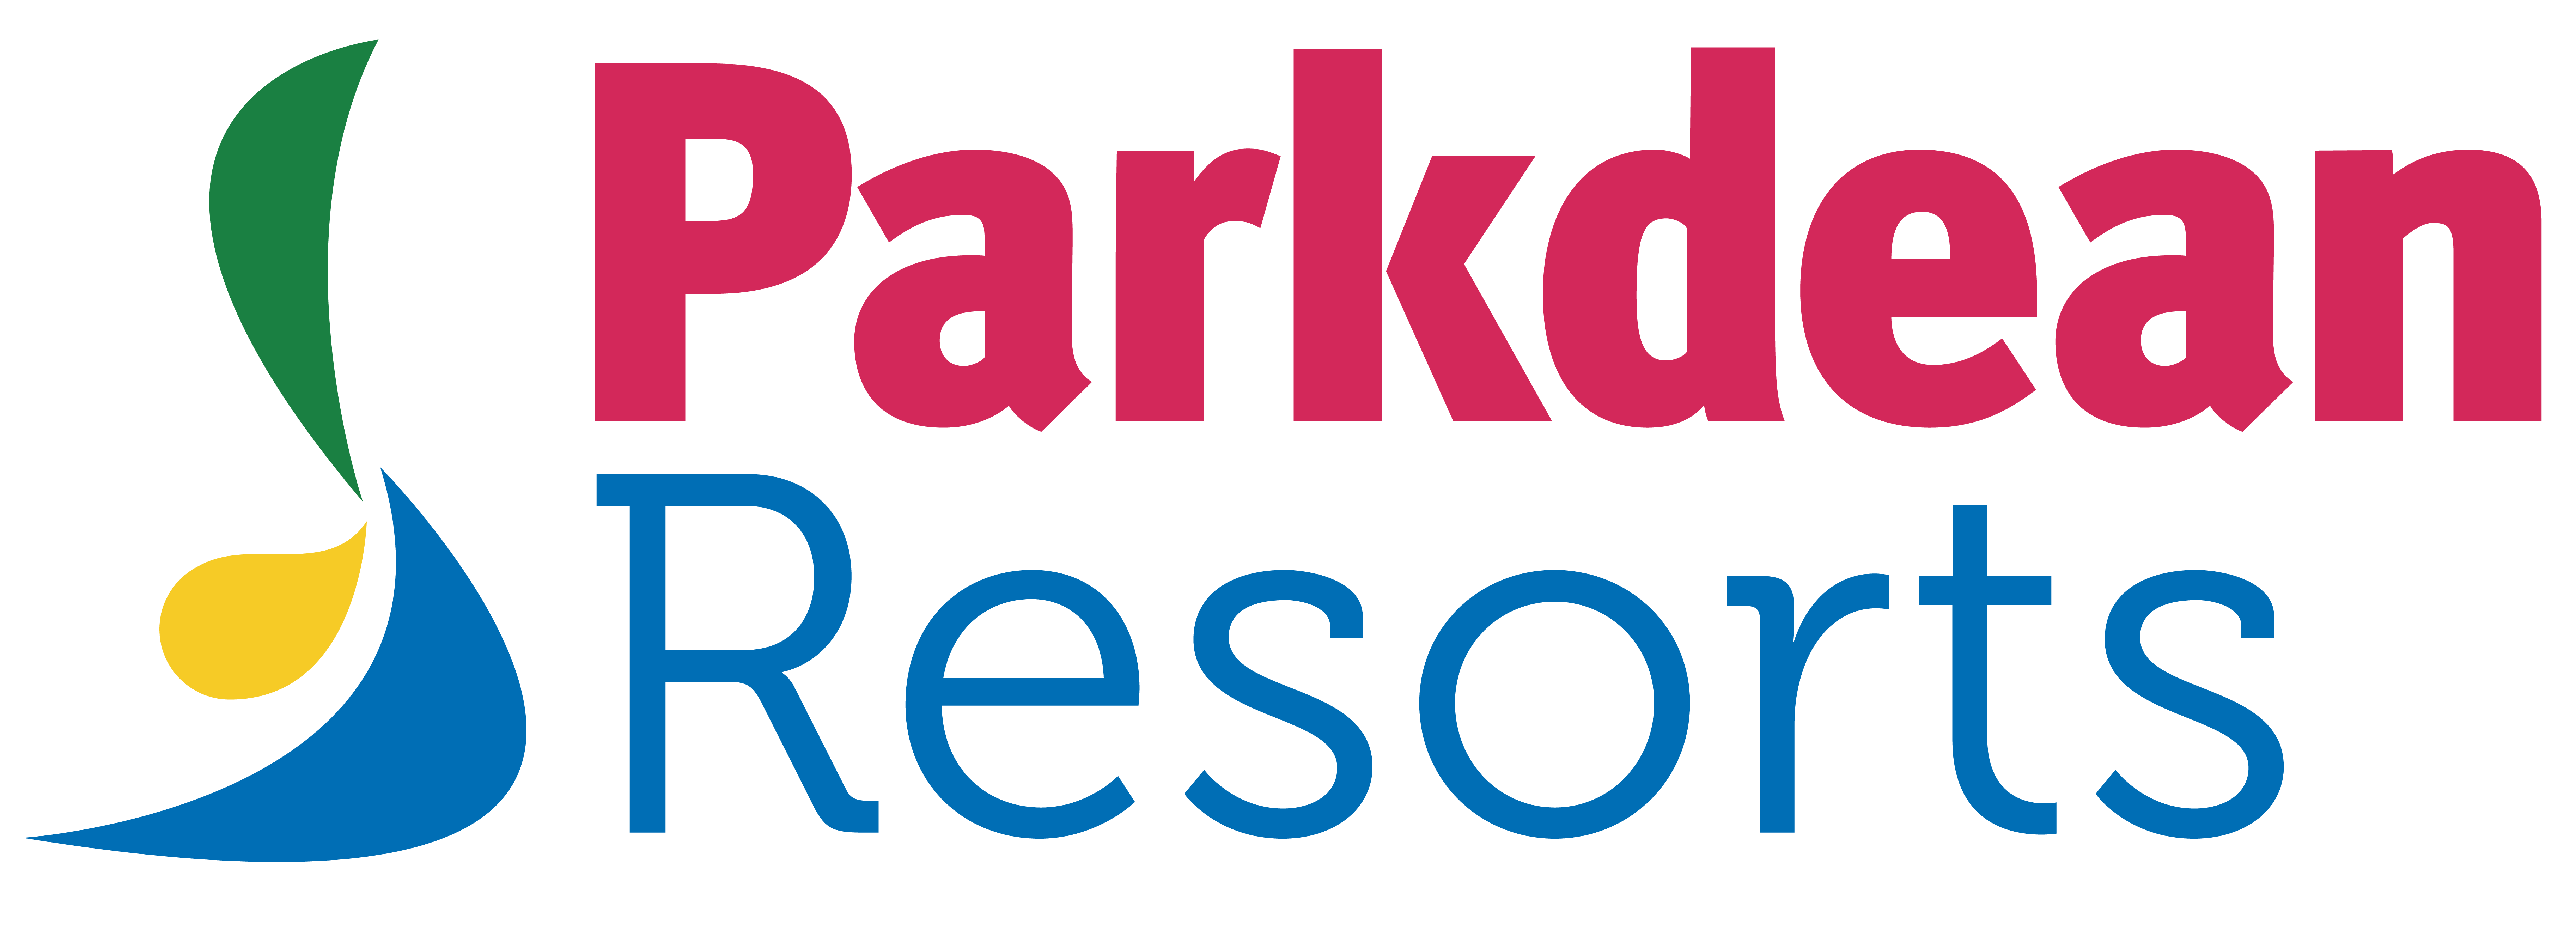 Parkdean resorts logo